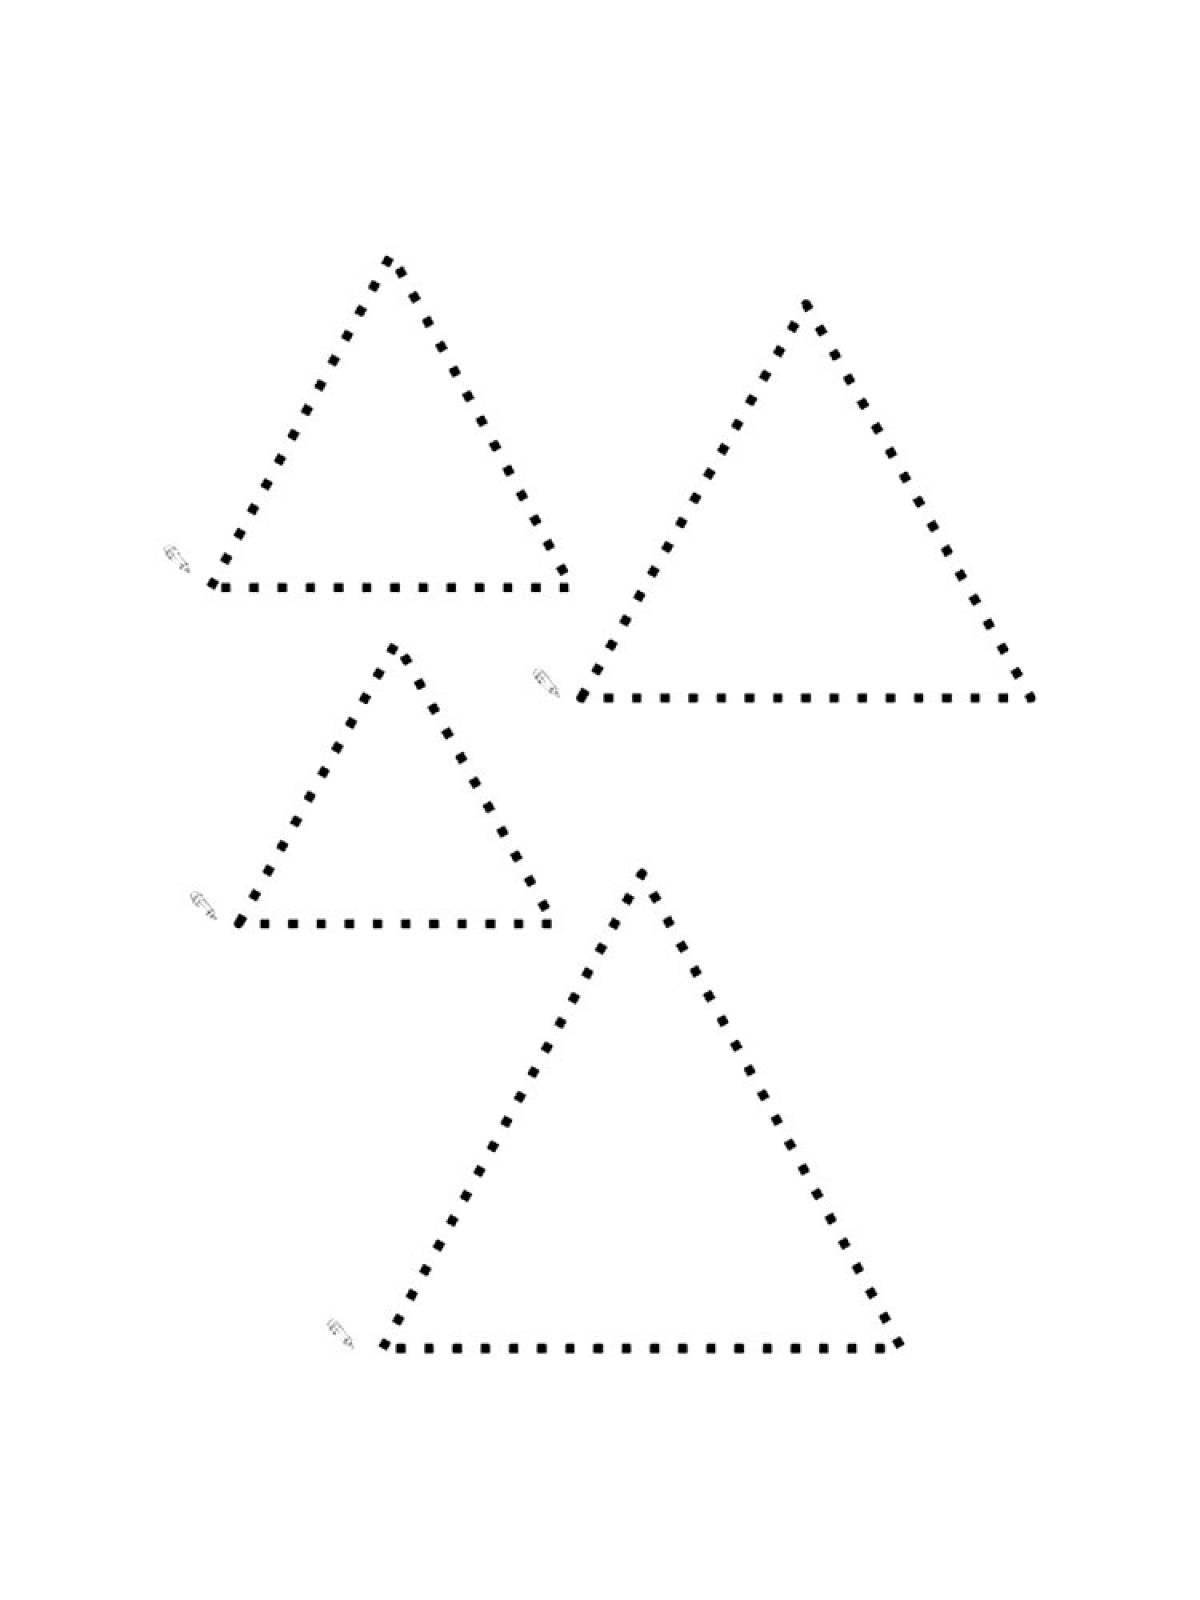 Triangle 15